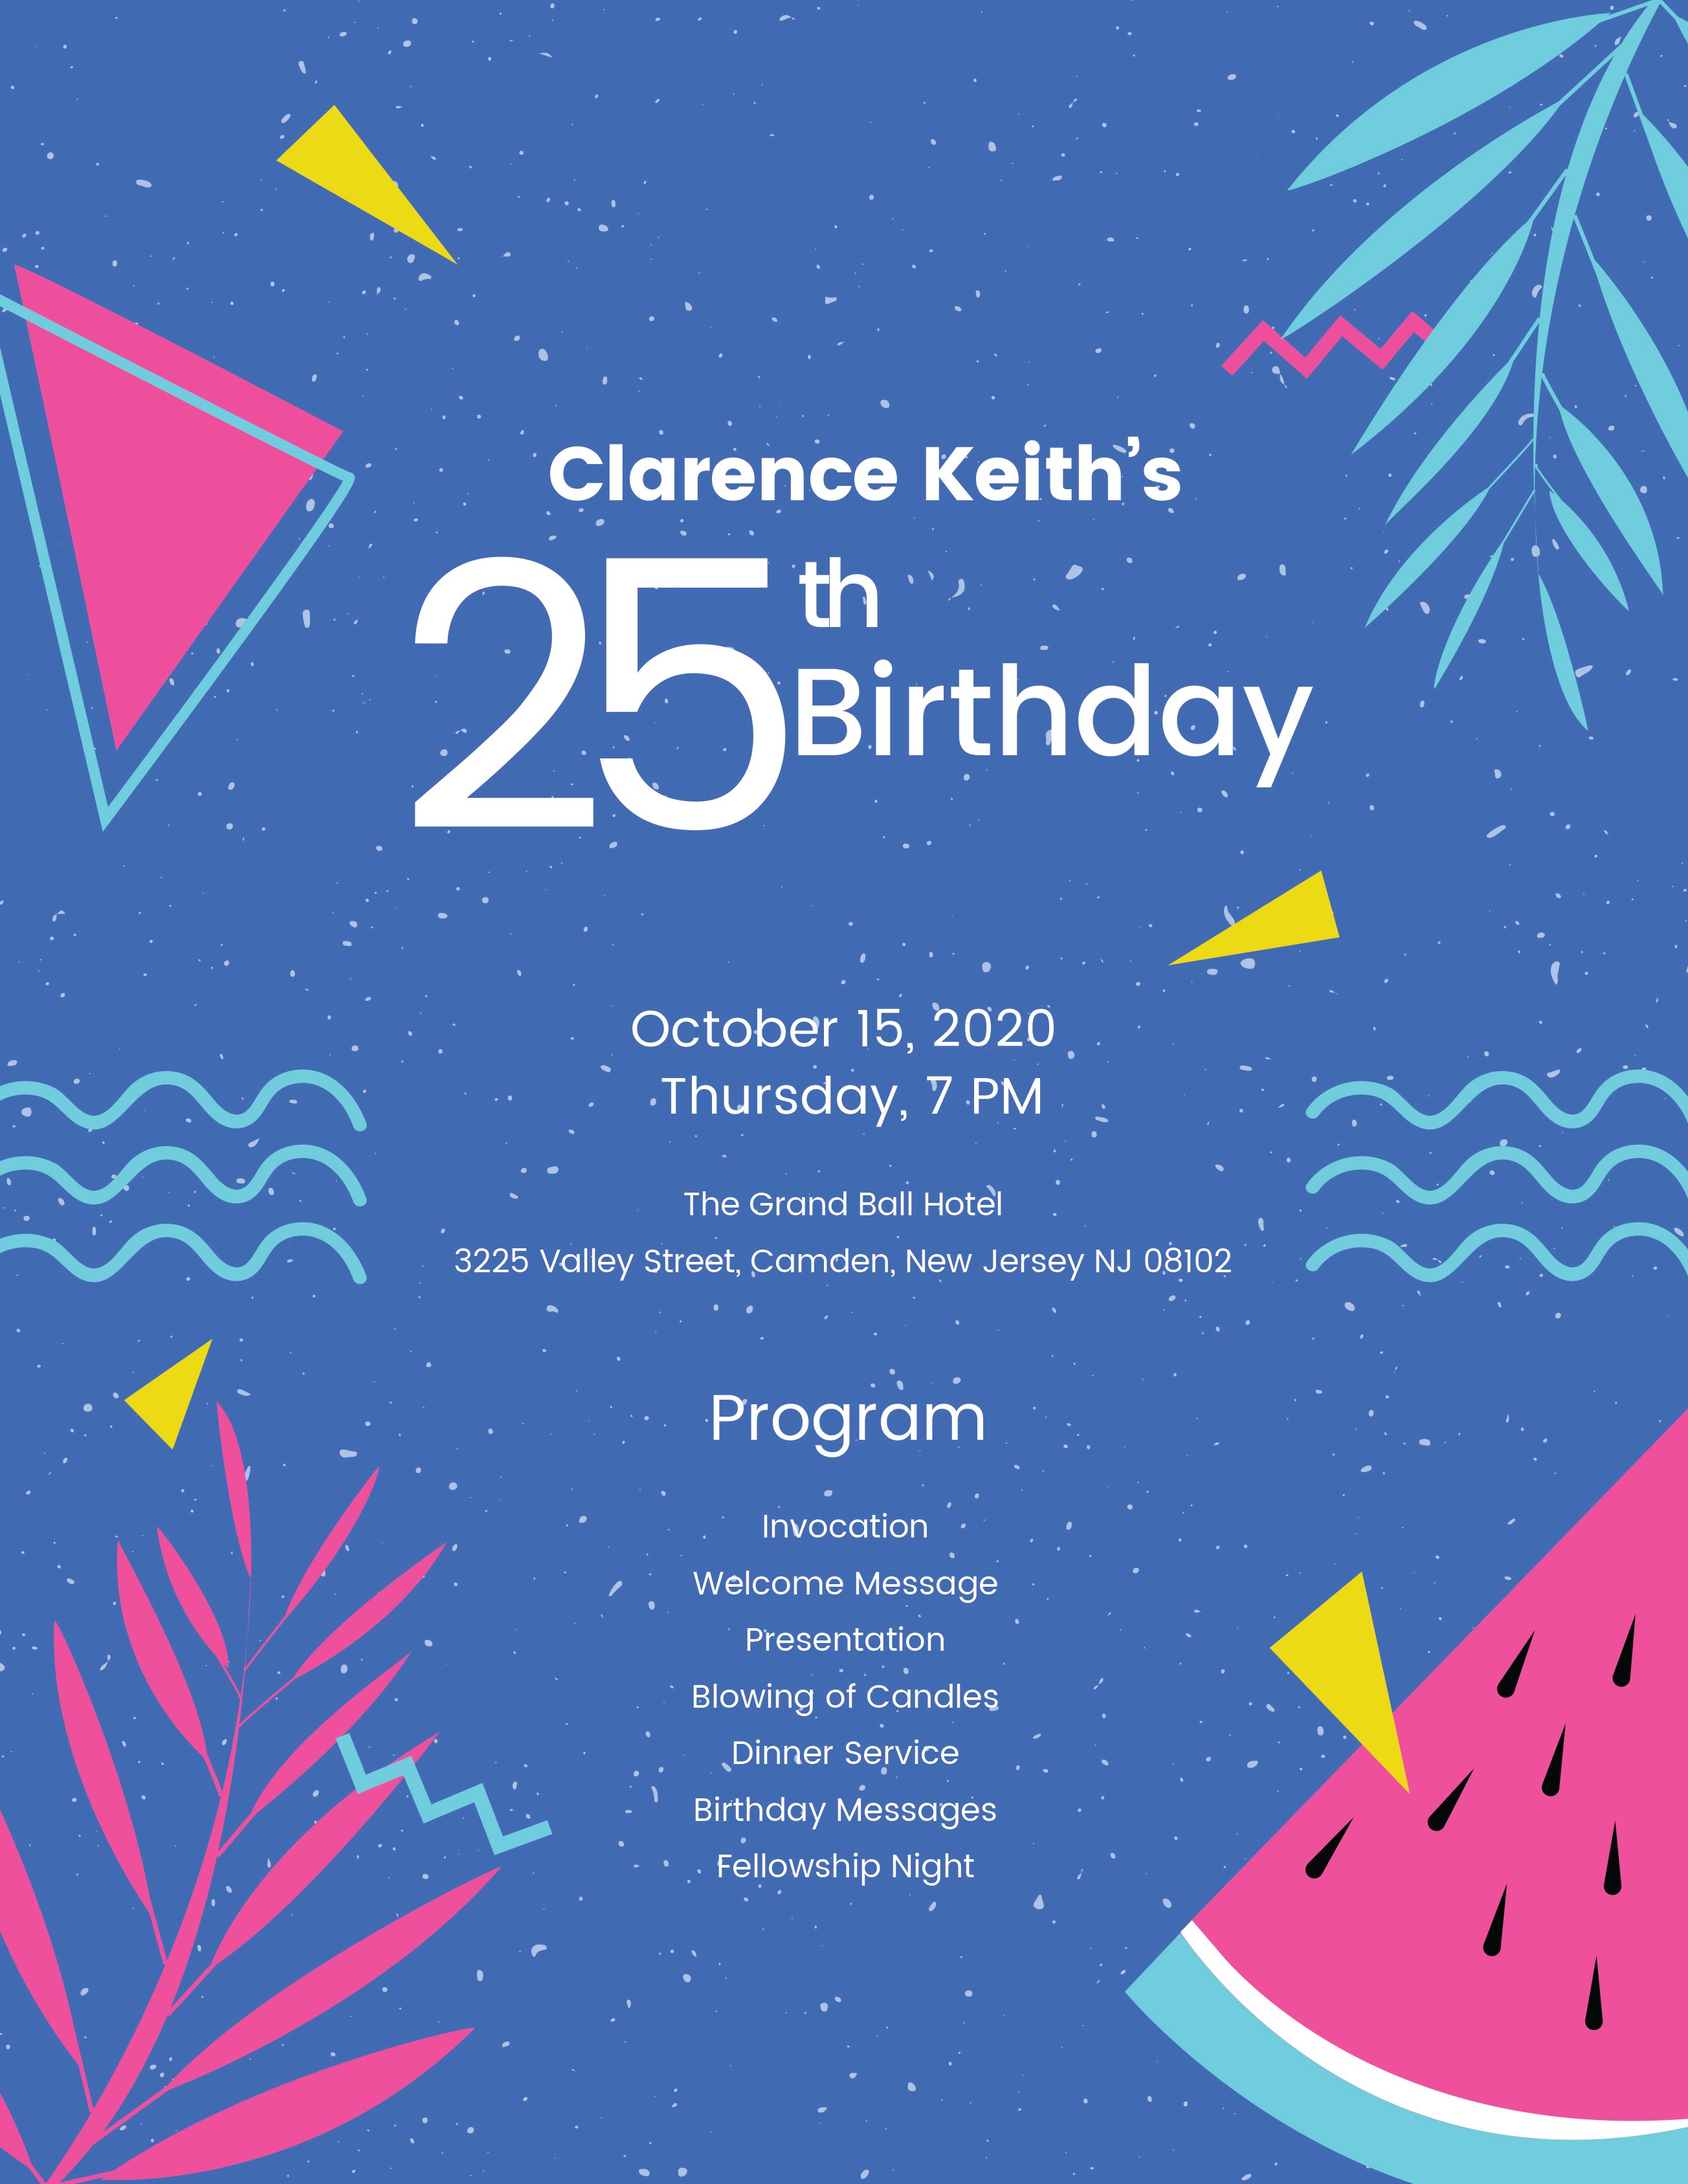 Sample Birthday Program Template in Adobe Photoshop Illustrator